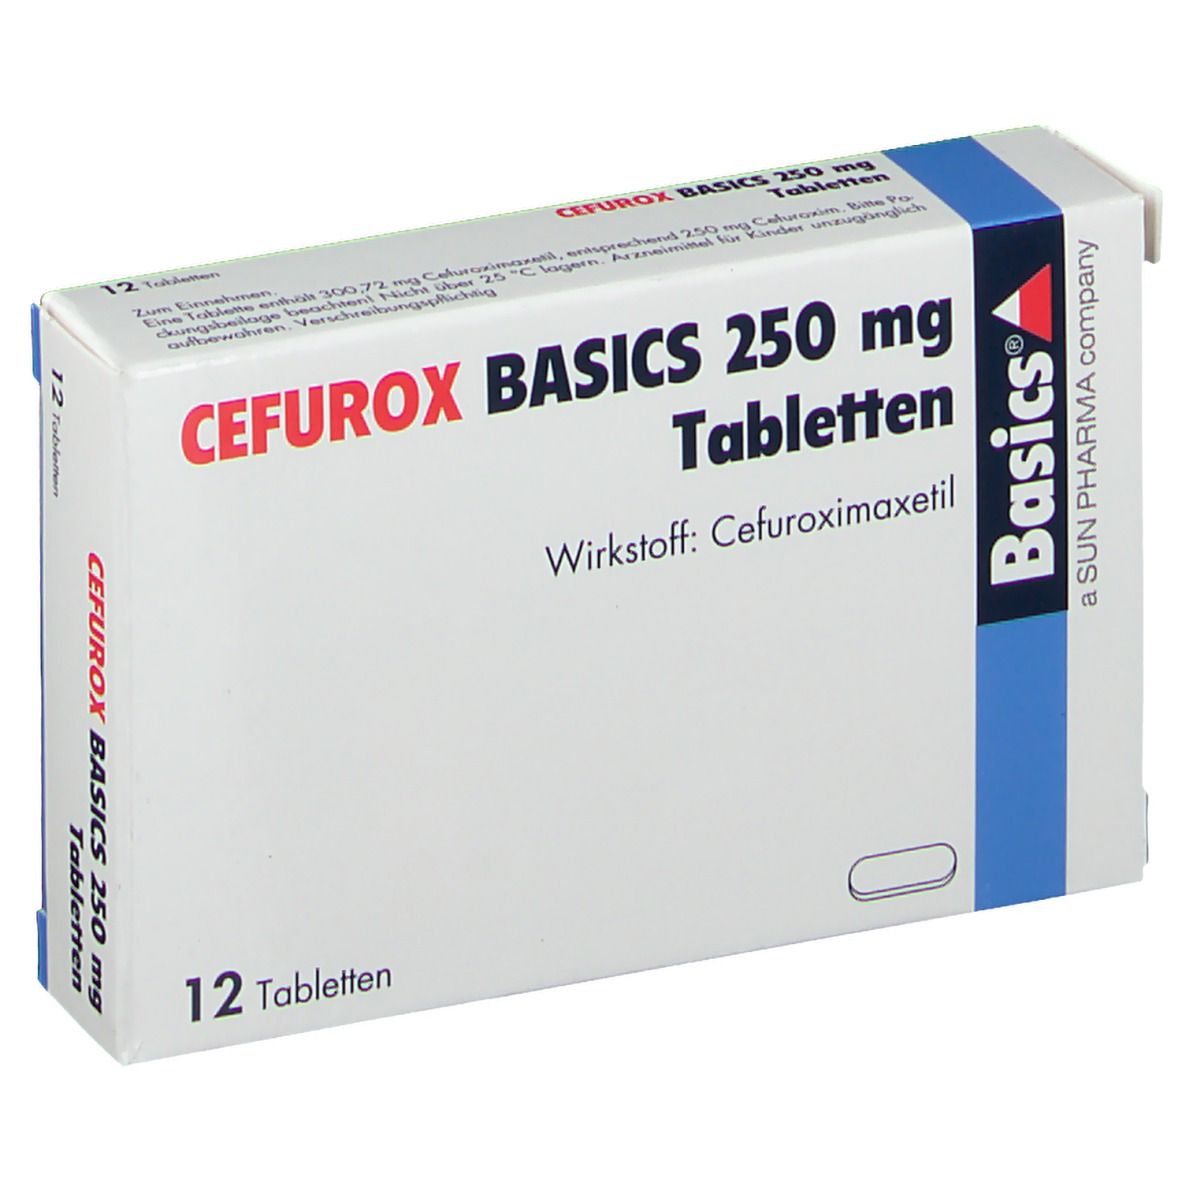 CEFUROX BASICS 250 mg.